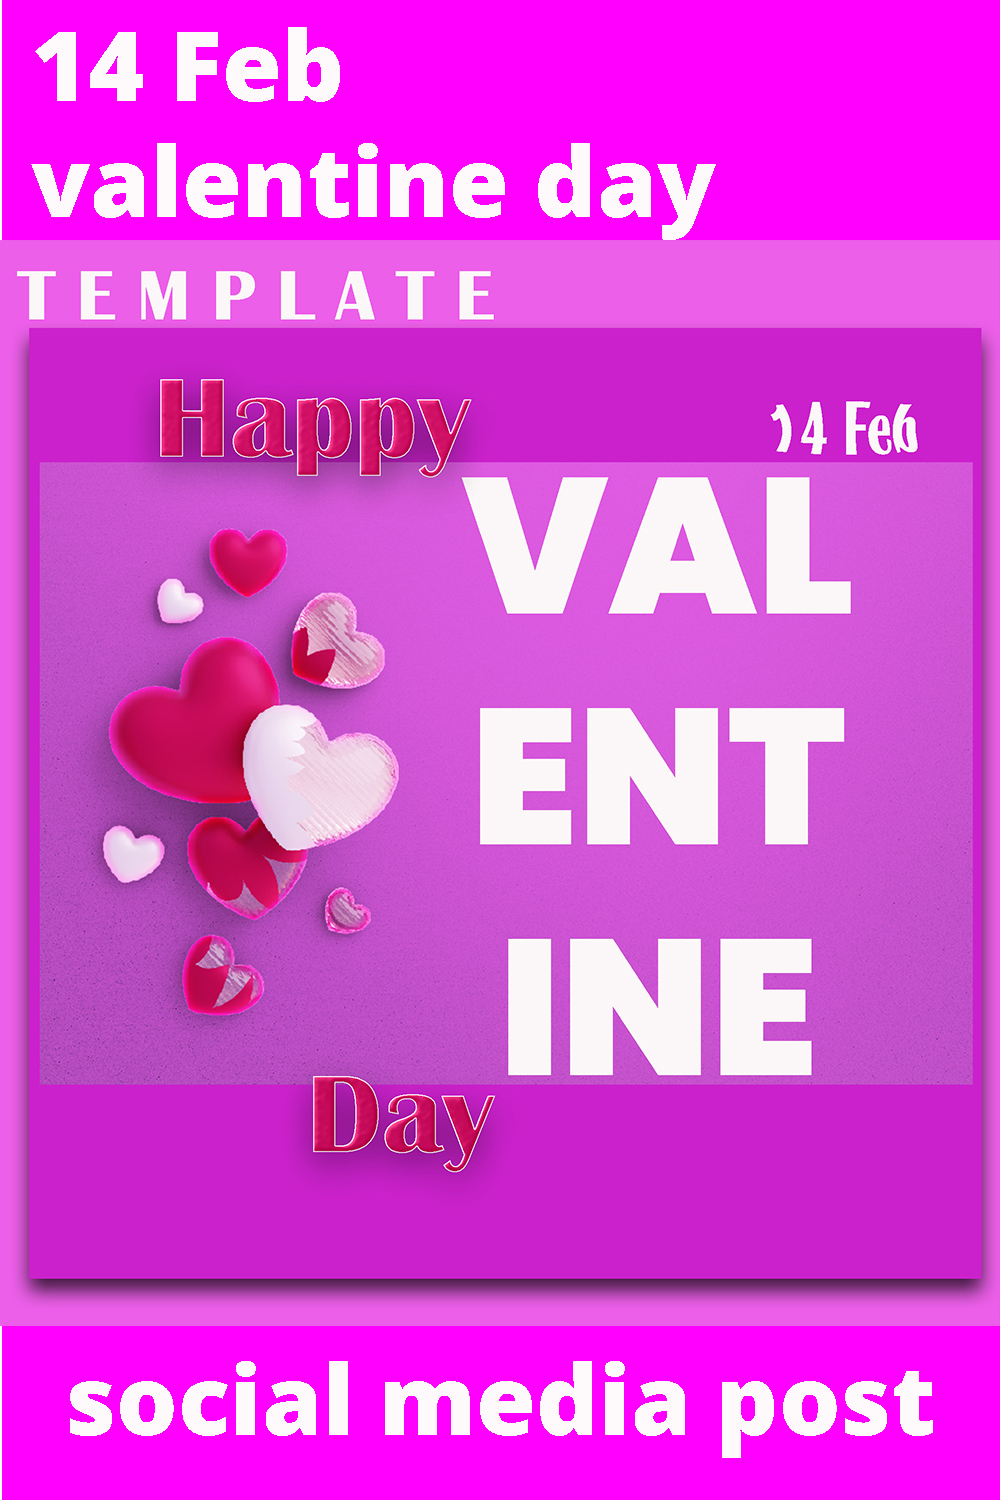 14 Feb International Valentine day pinterest preview image.